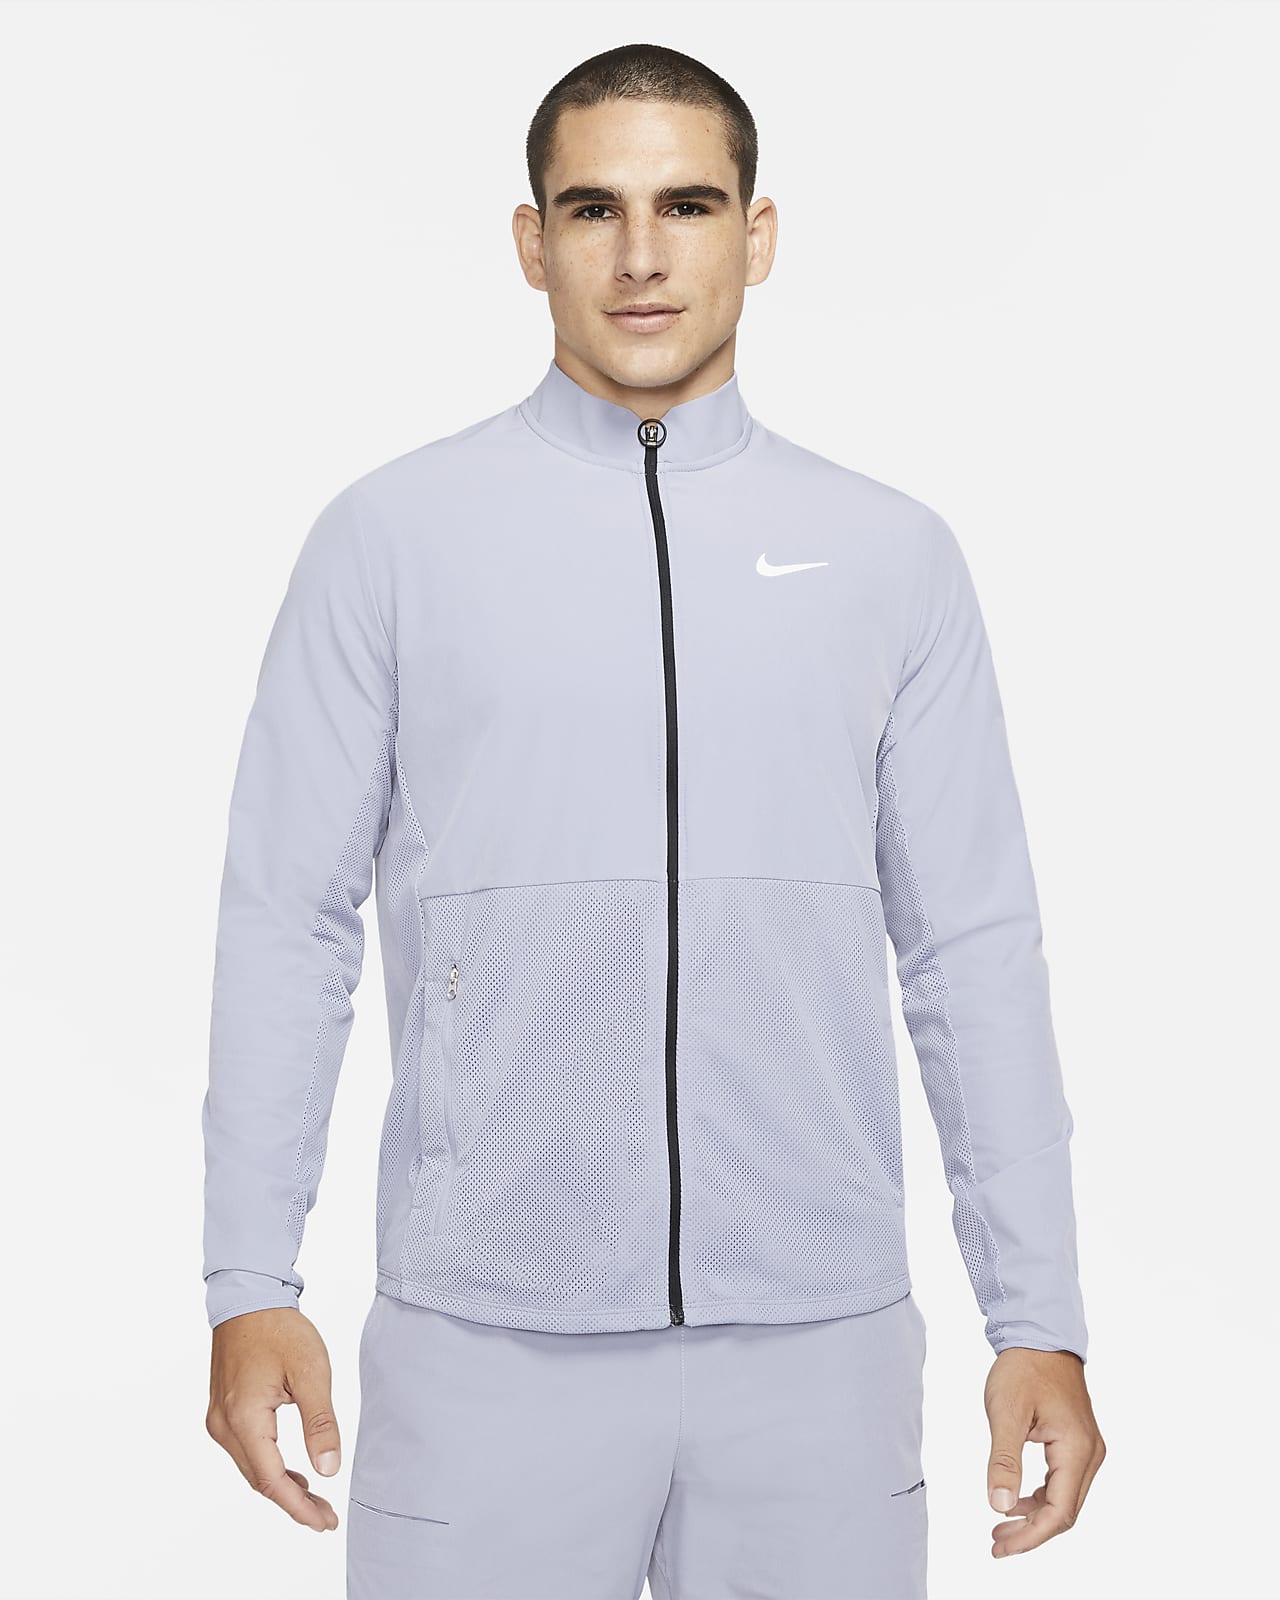 despierta Orientar Tratamiento Preferencial Nike Court Jacket United Kingdom, SAVE 47% - aveclumiere.com